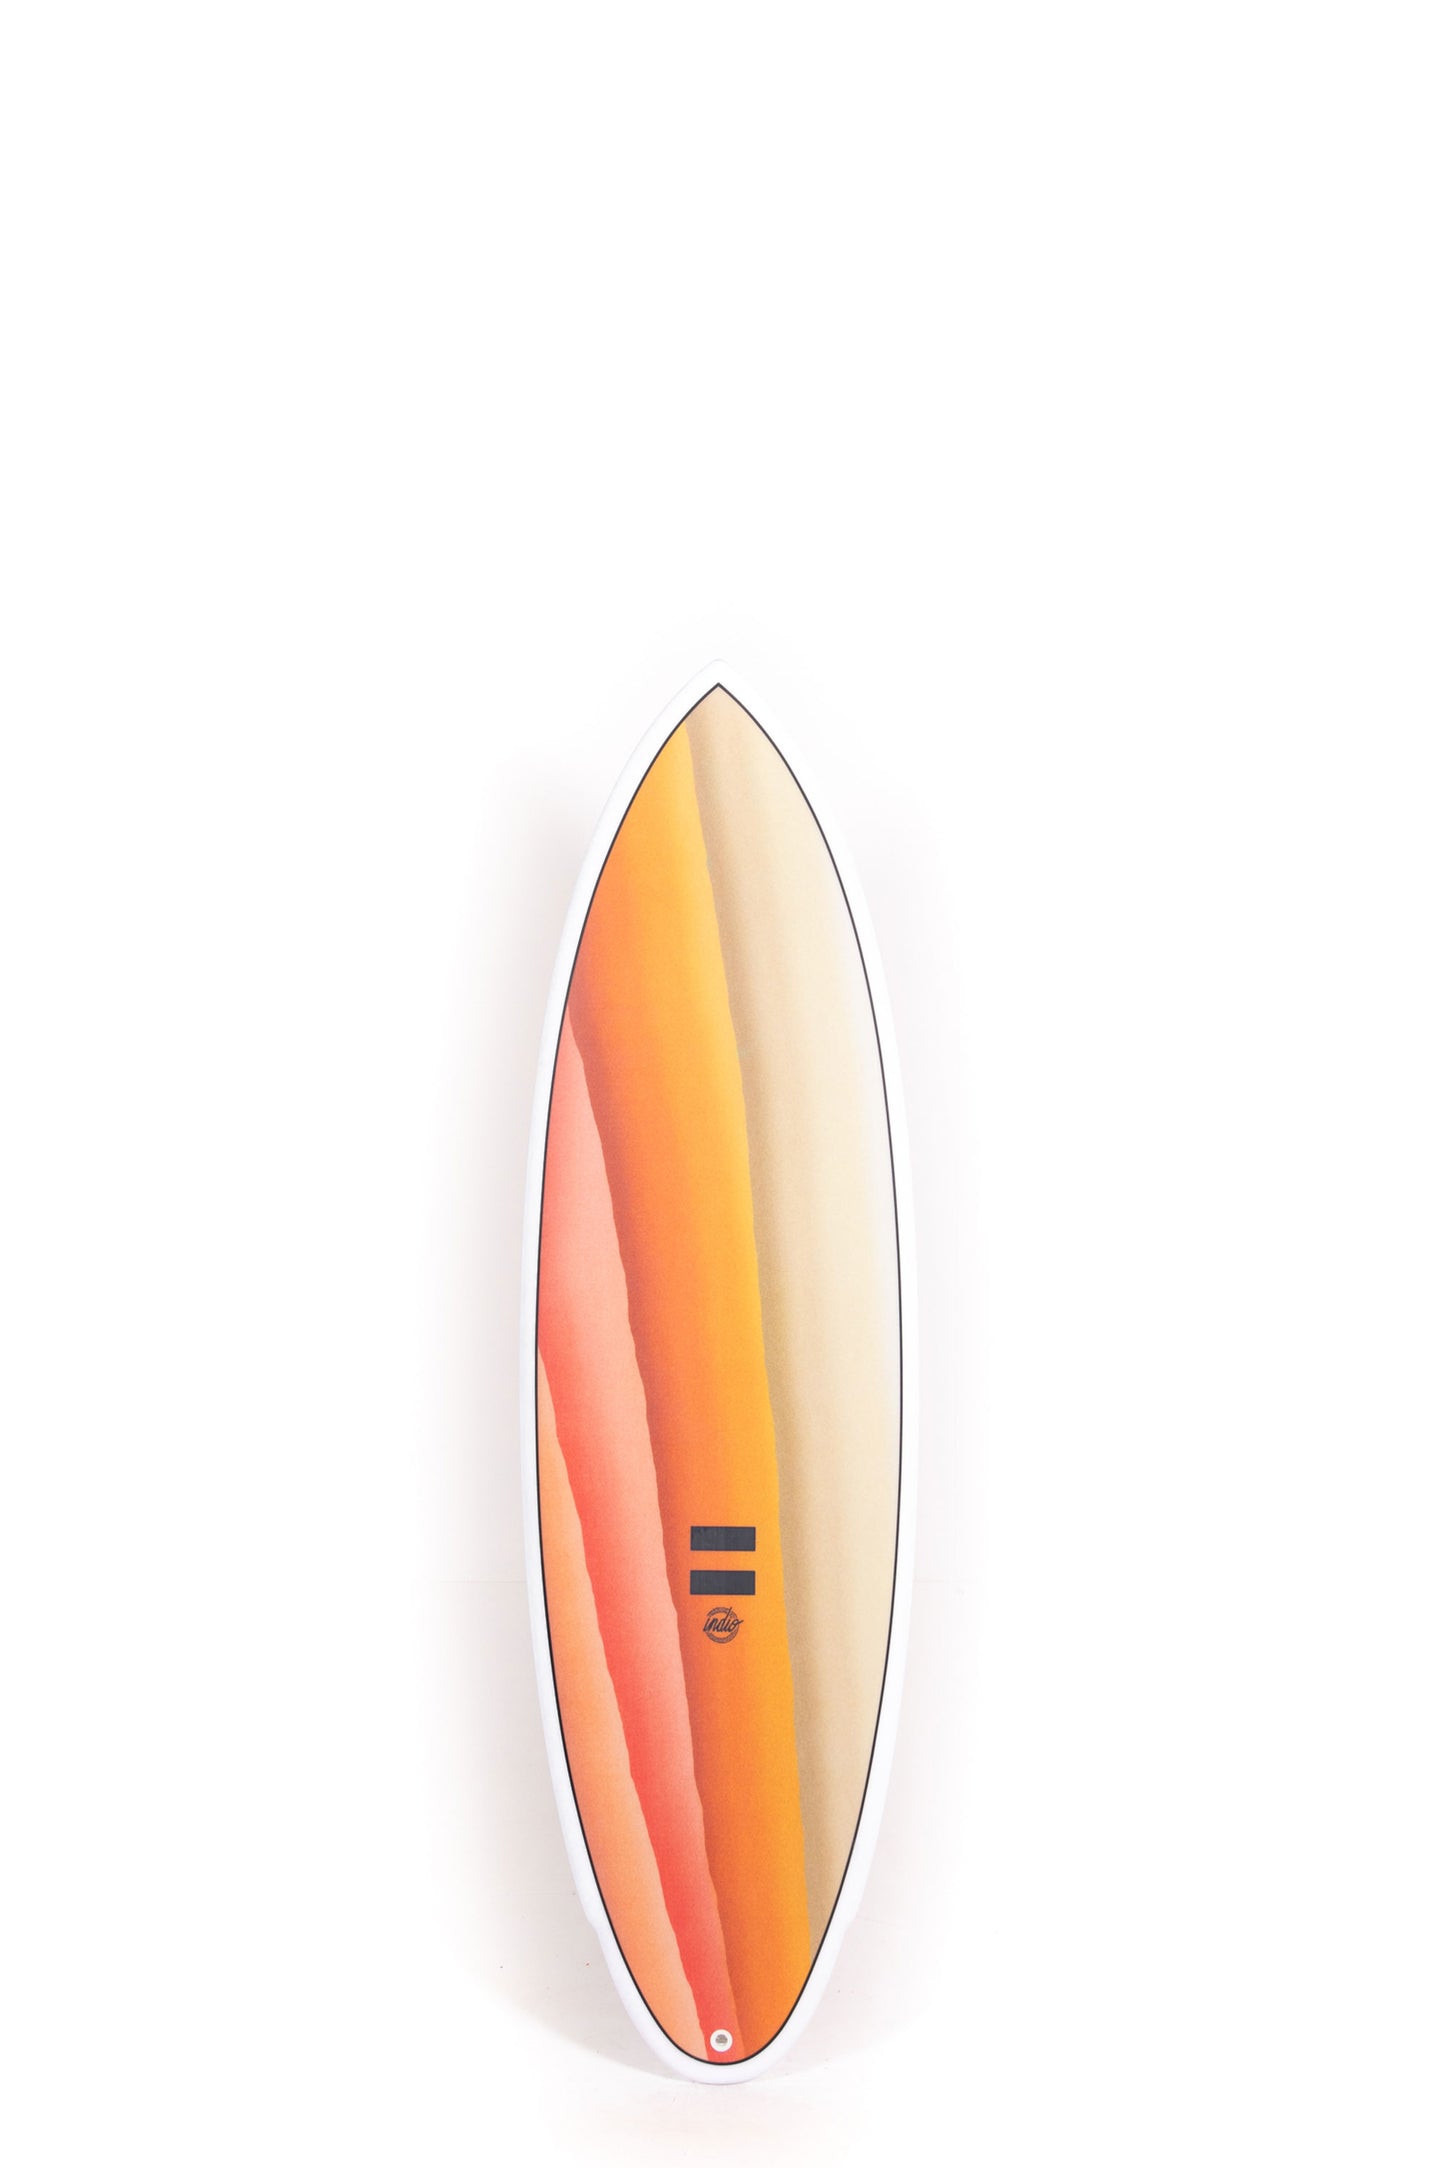 Pukas Surf Shop Indio Surfboards Rancho India Gold 6'2"